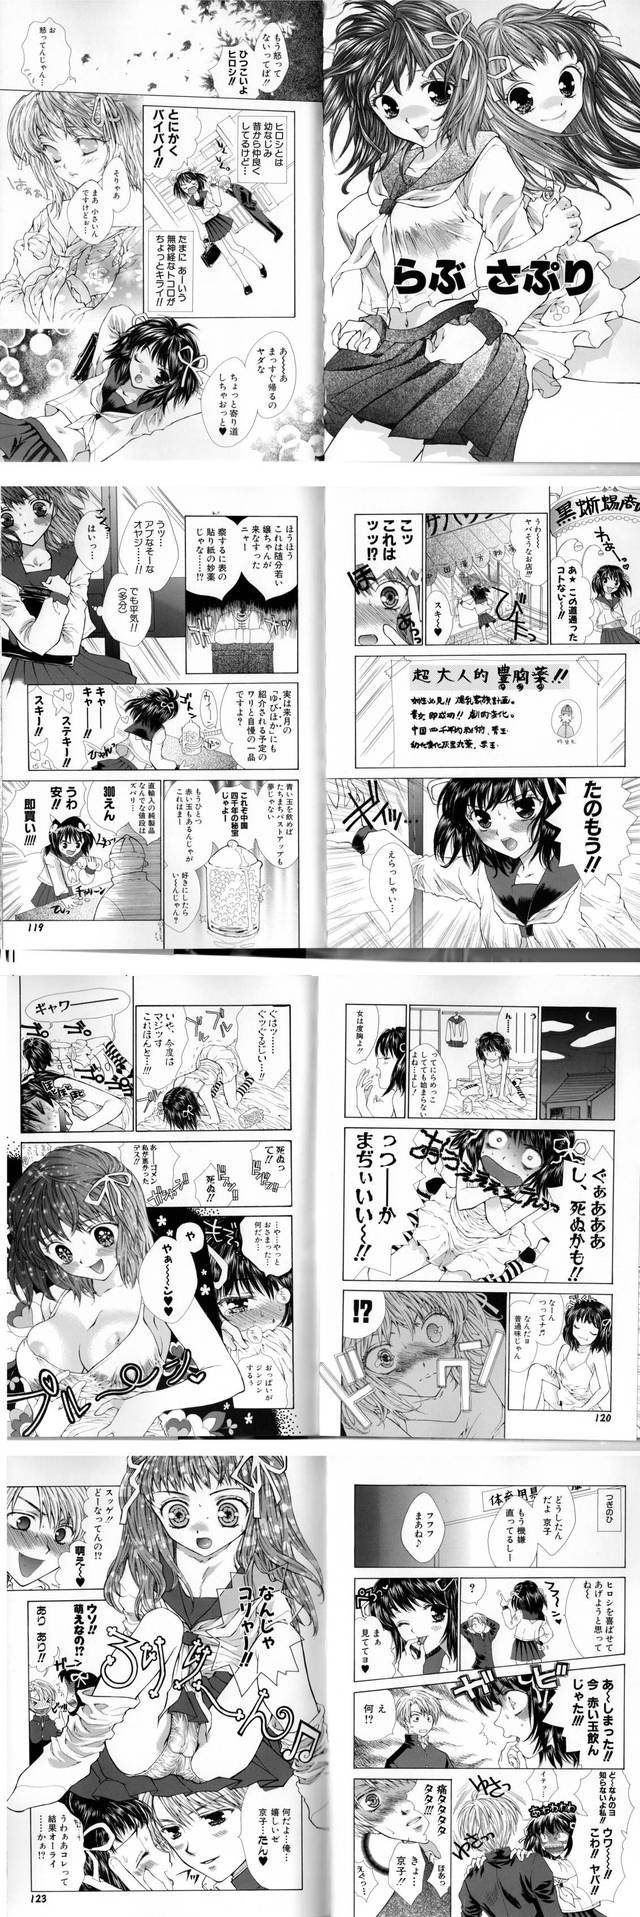 manga porn comic porno manga original porn eater media comic soul ared